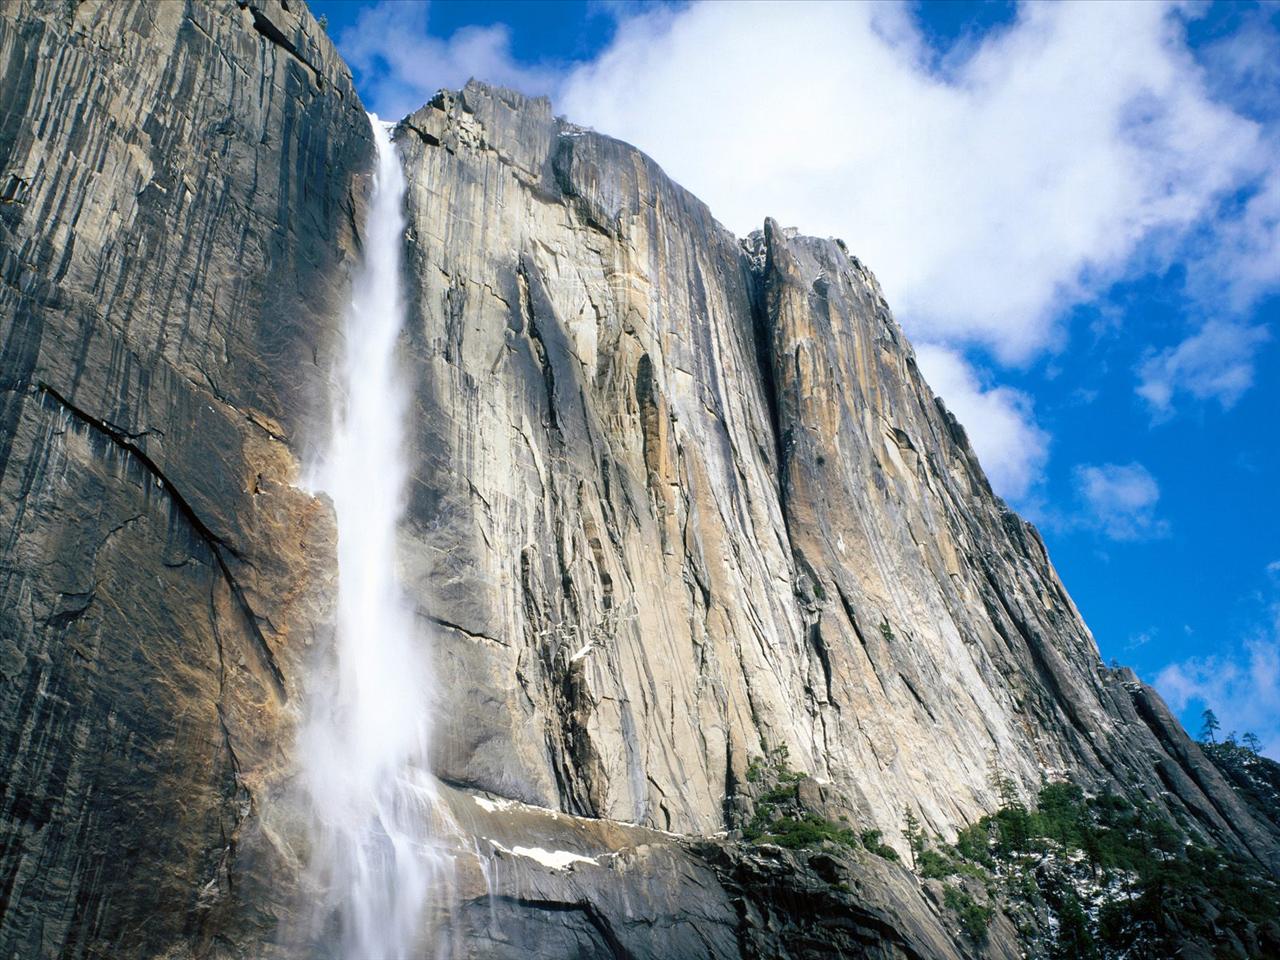 Best Collection 3 - Upper Yosemite Falls, Yosemite National Park, California.jpg